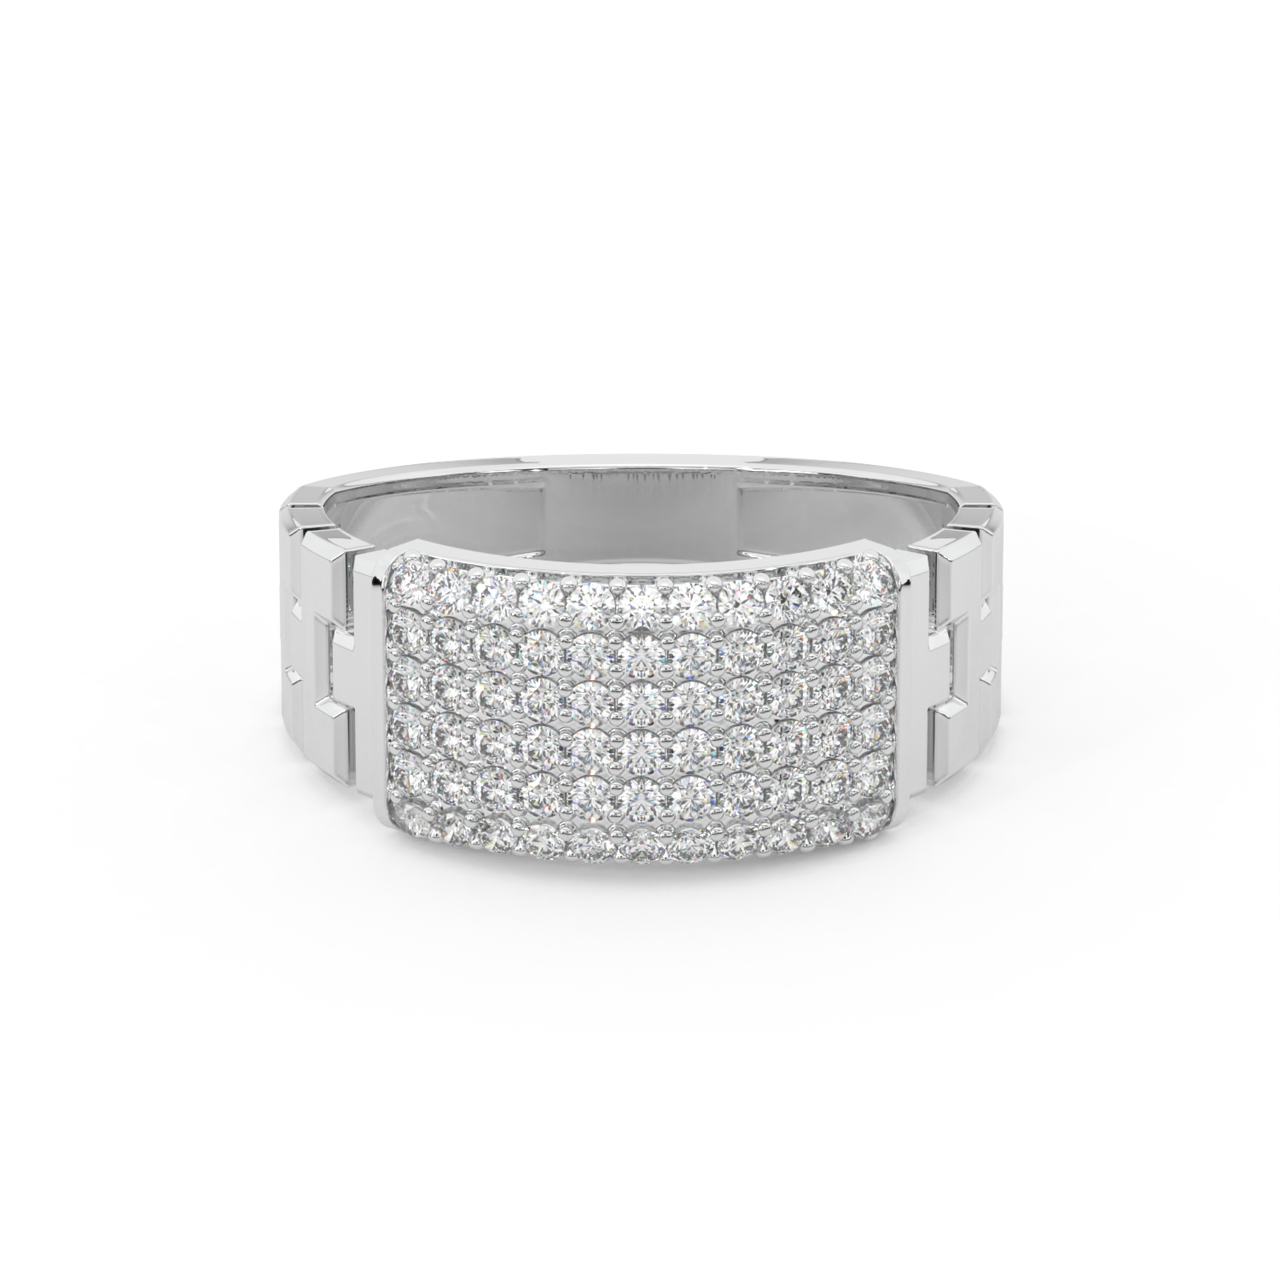 Minimalistic Diamond Ring For Men